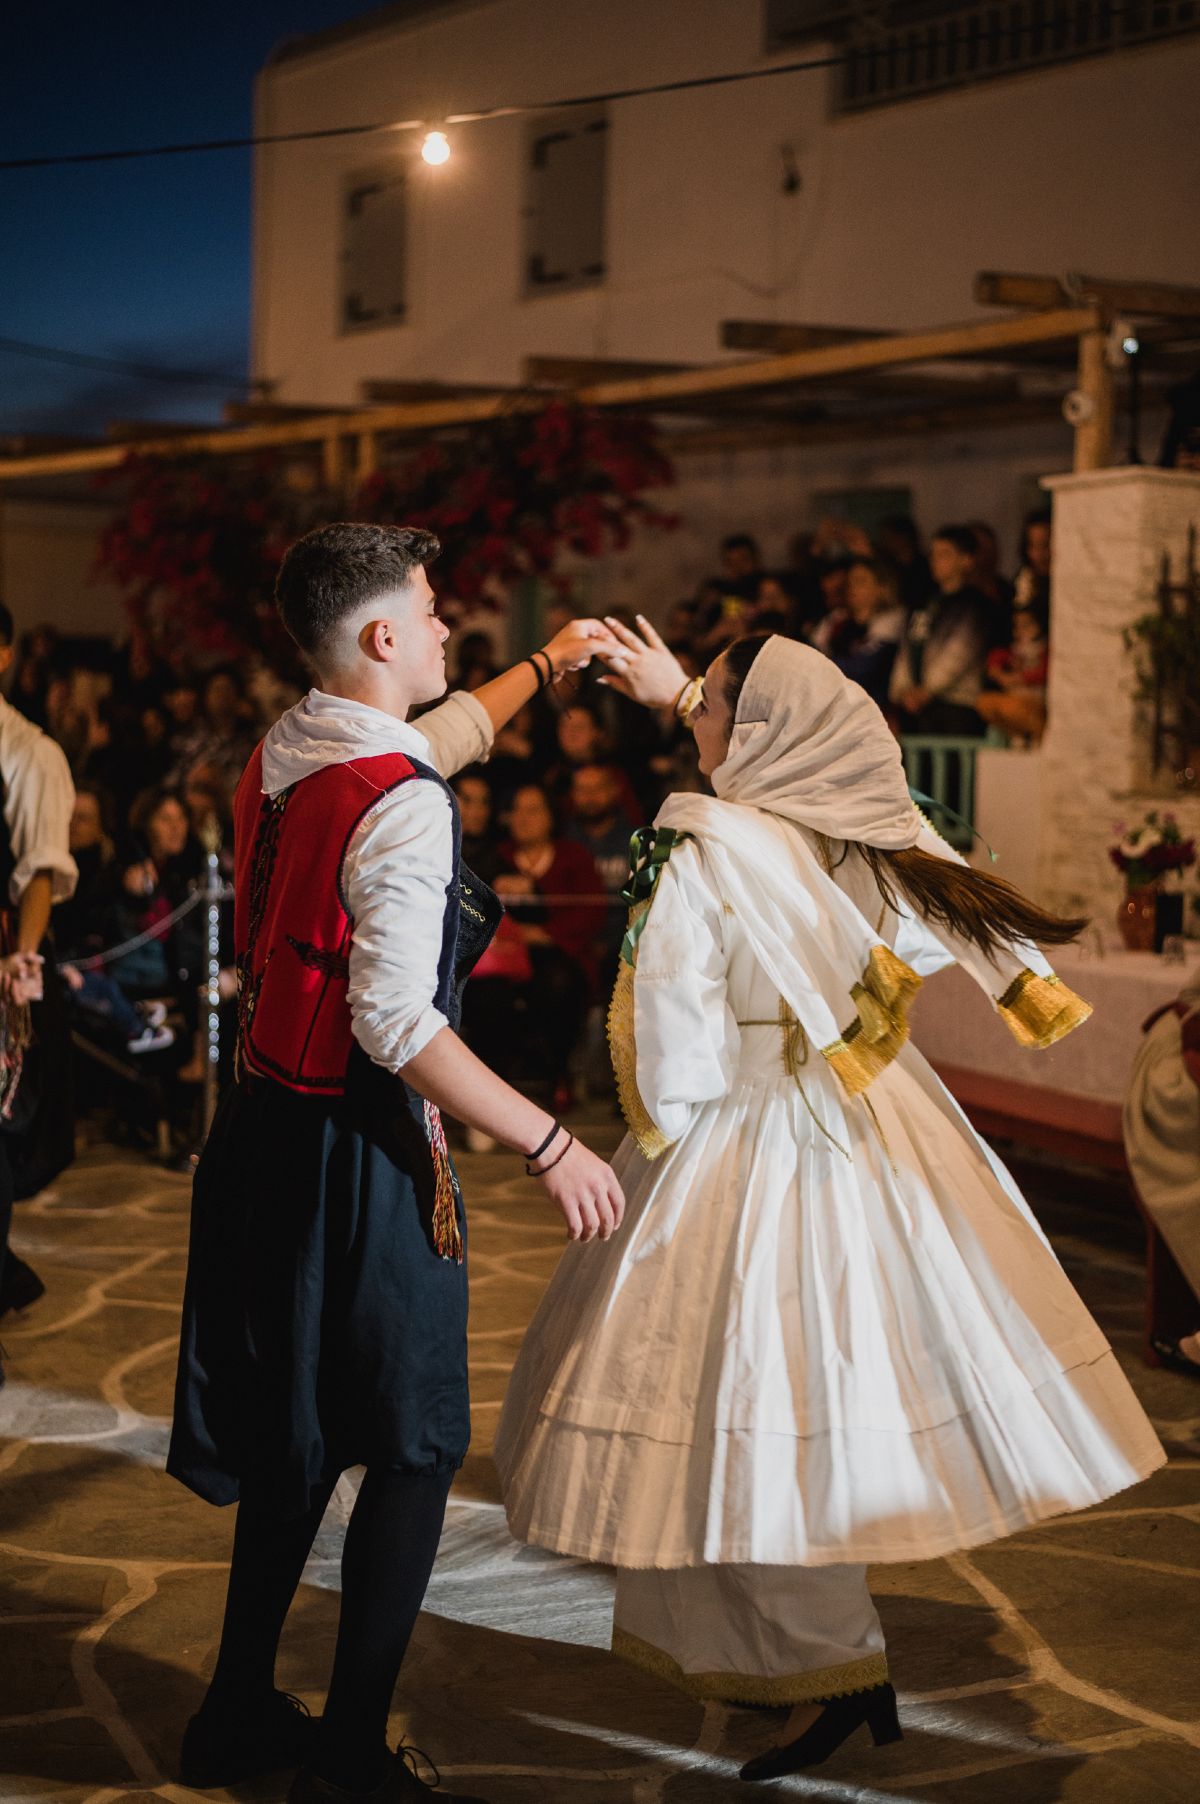 5o Φεστιβάλ “Η κούνια της Λαμπρής”: Το γνωστό έθιμο του Πάσχα αναβιώνει και φέτος στην Κύθνο